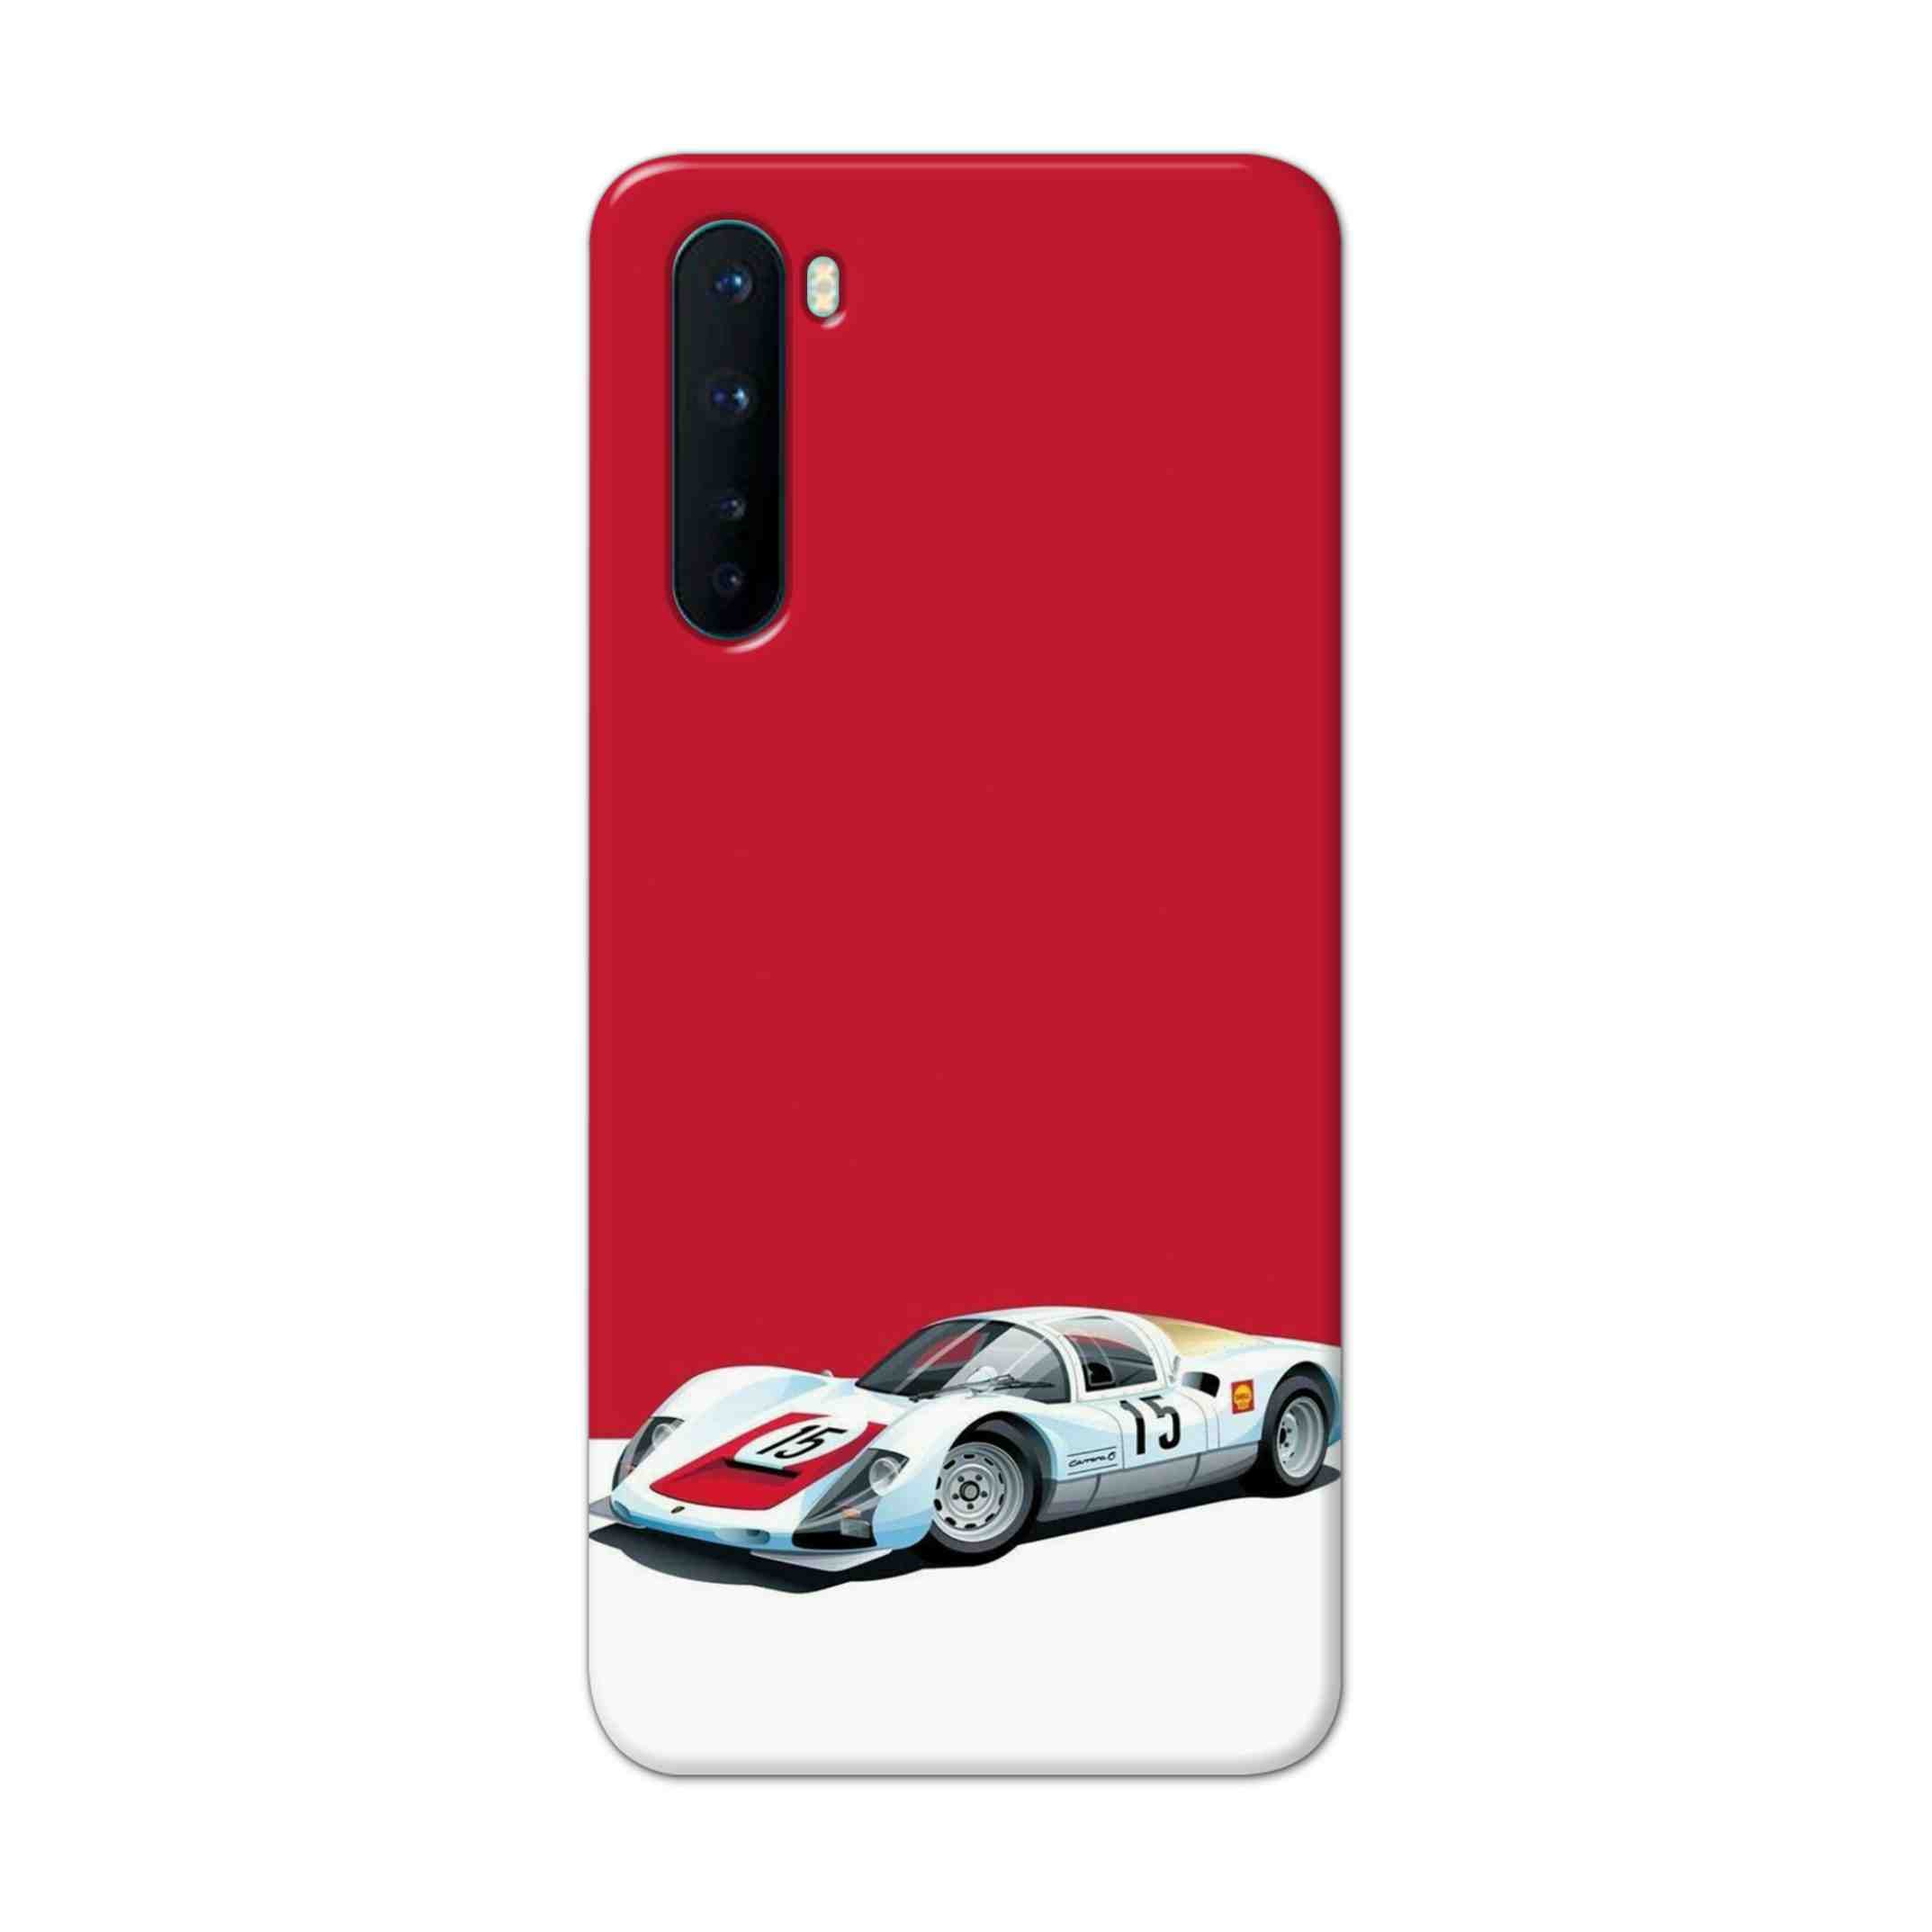 Buy Ferrari F15 Hard Back Mobile Phone Case Cover For OnePlus Nord Online